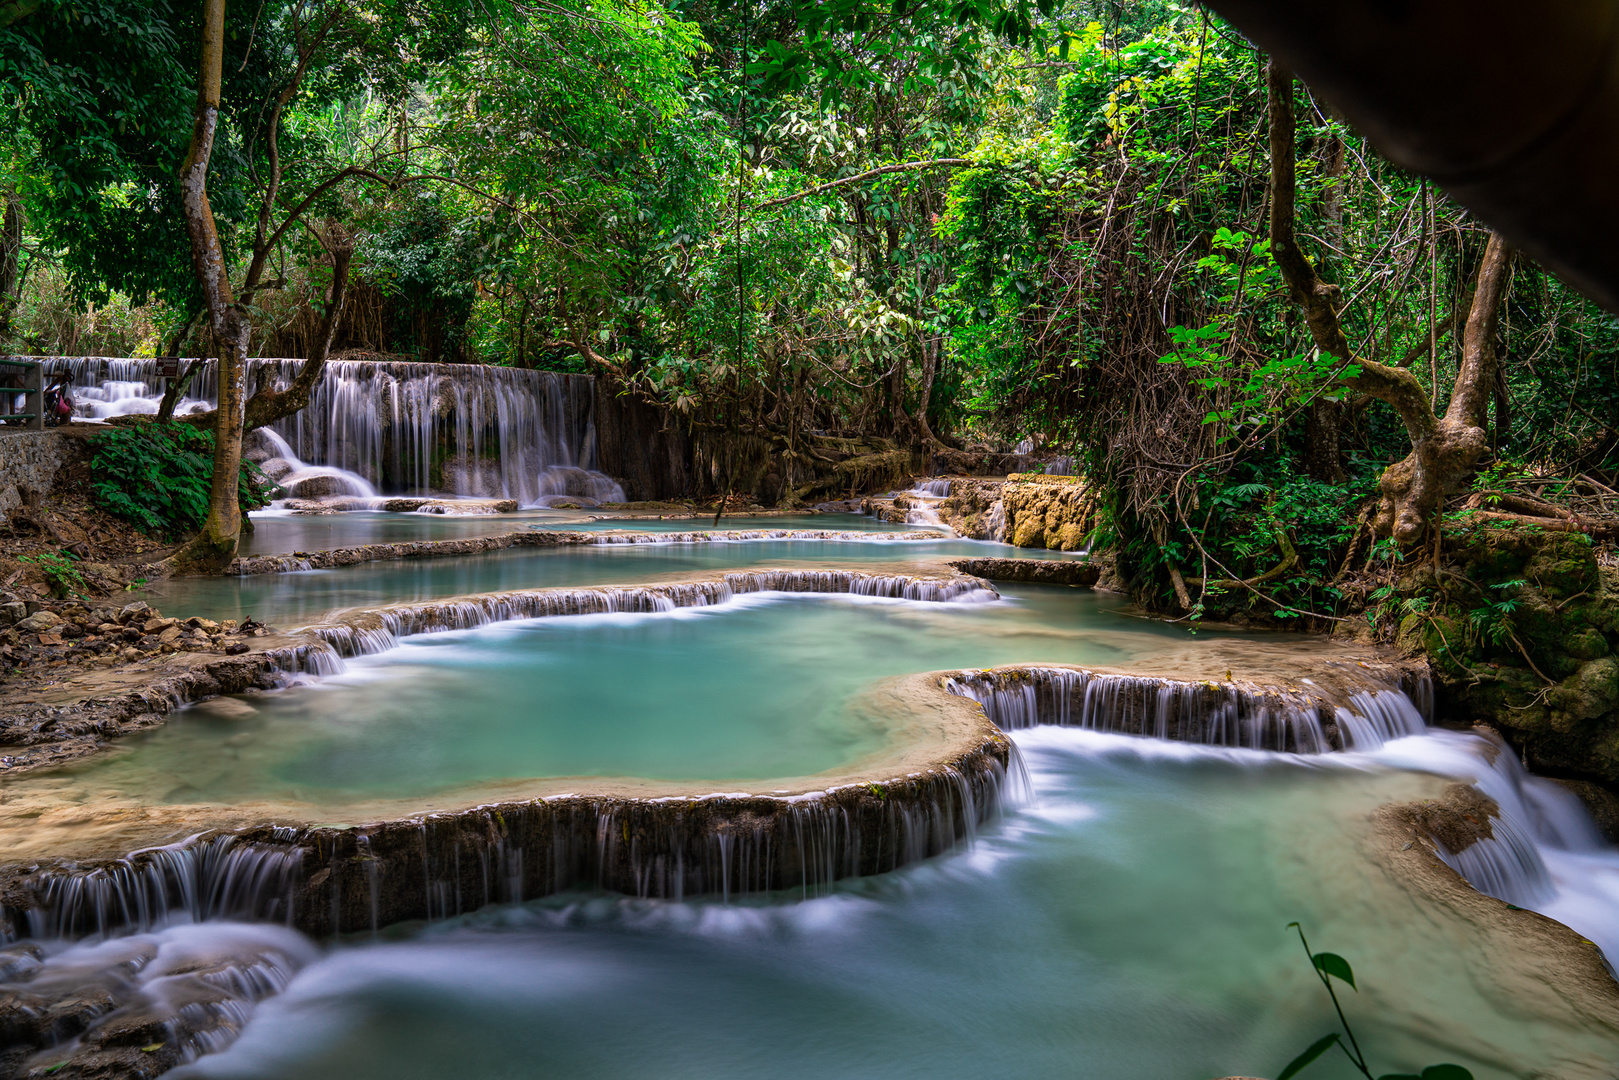 Wasserfall in Laos